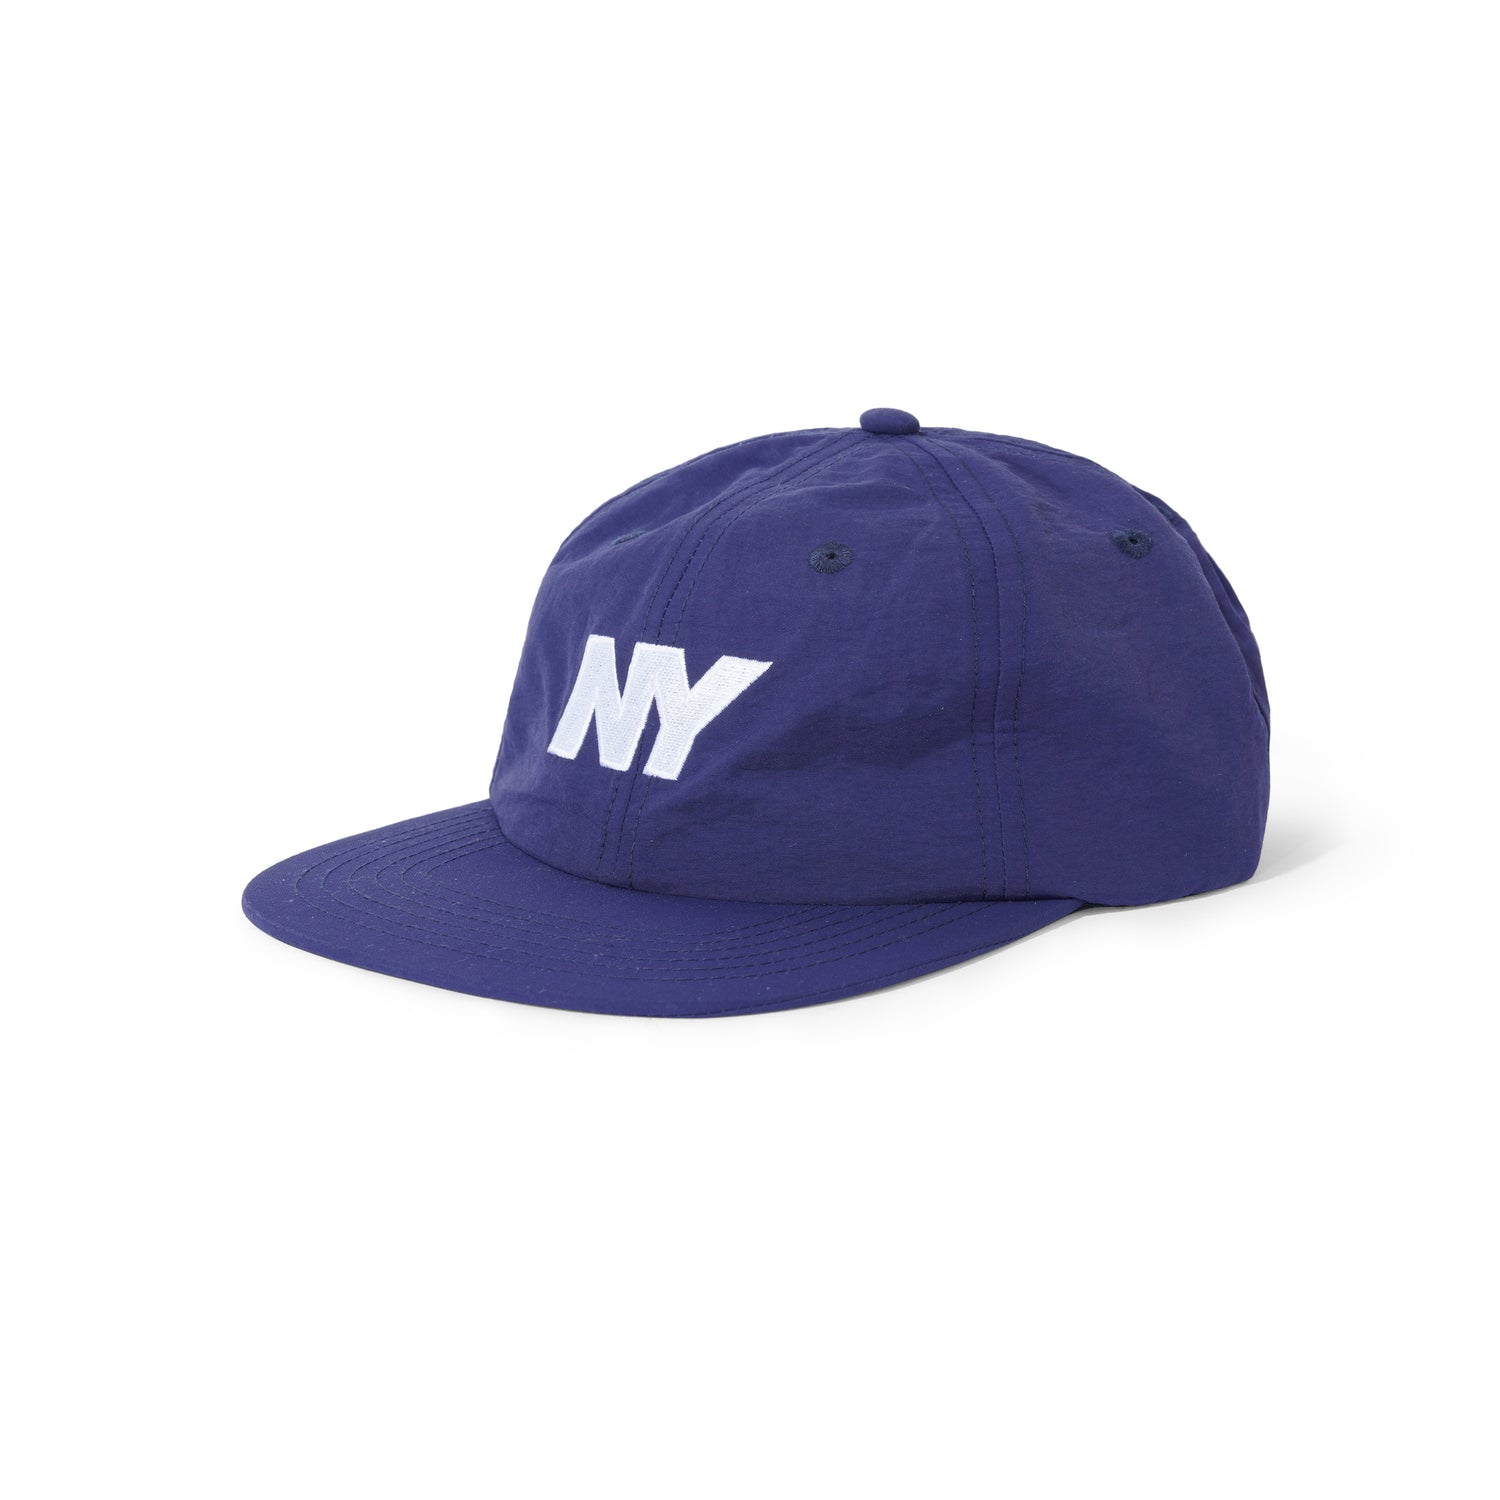 NY Speed Logo Hat, Light Blue / White